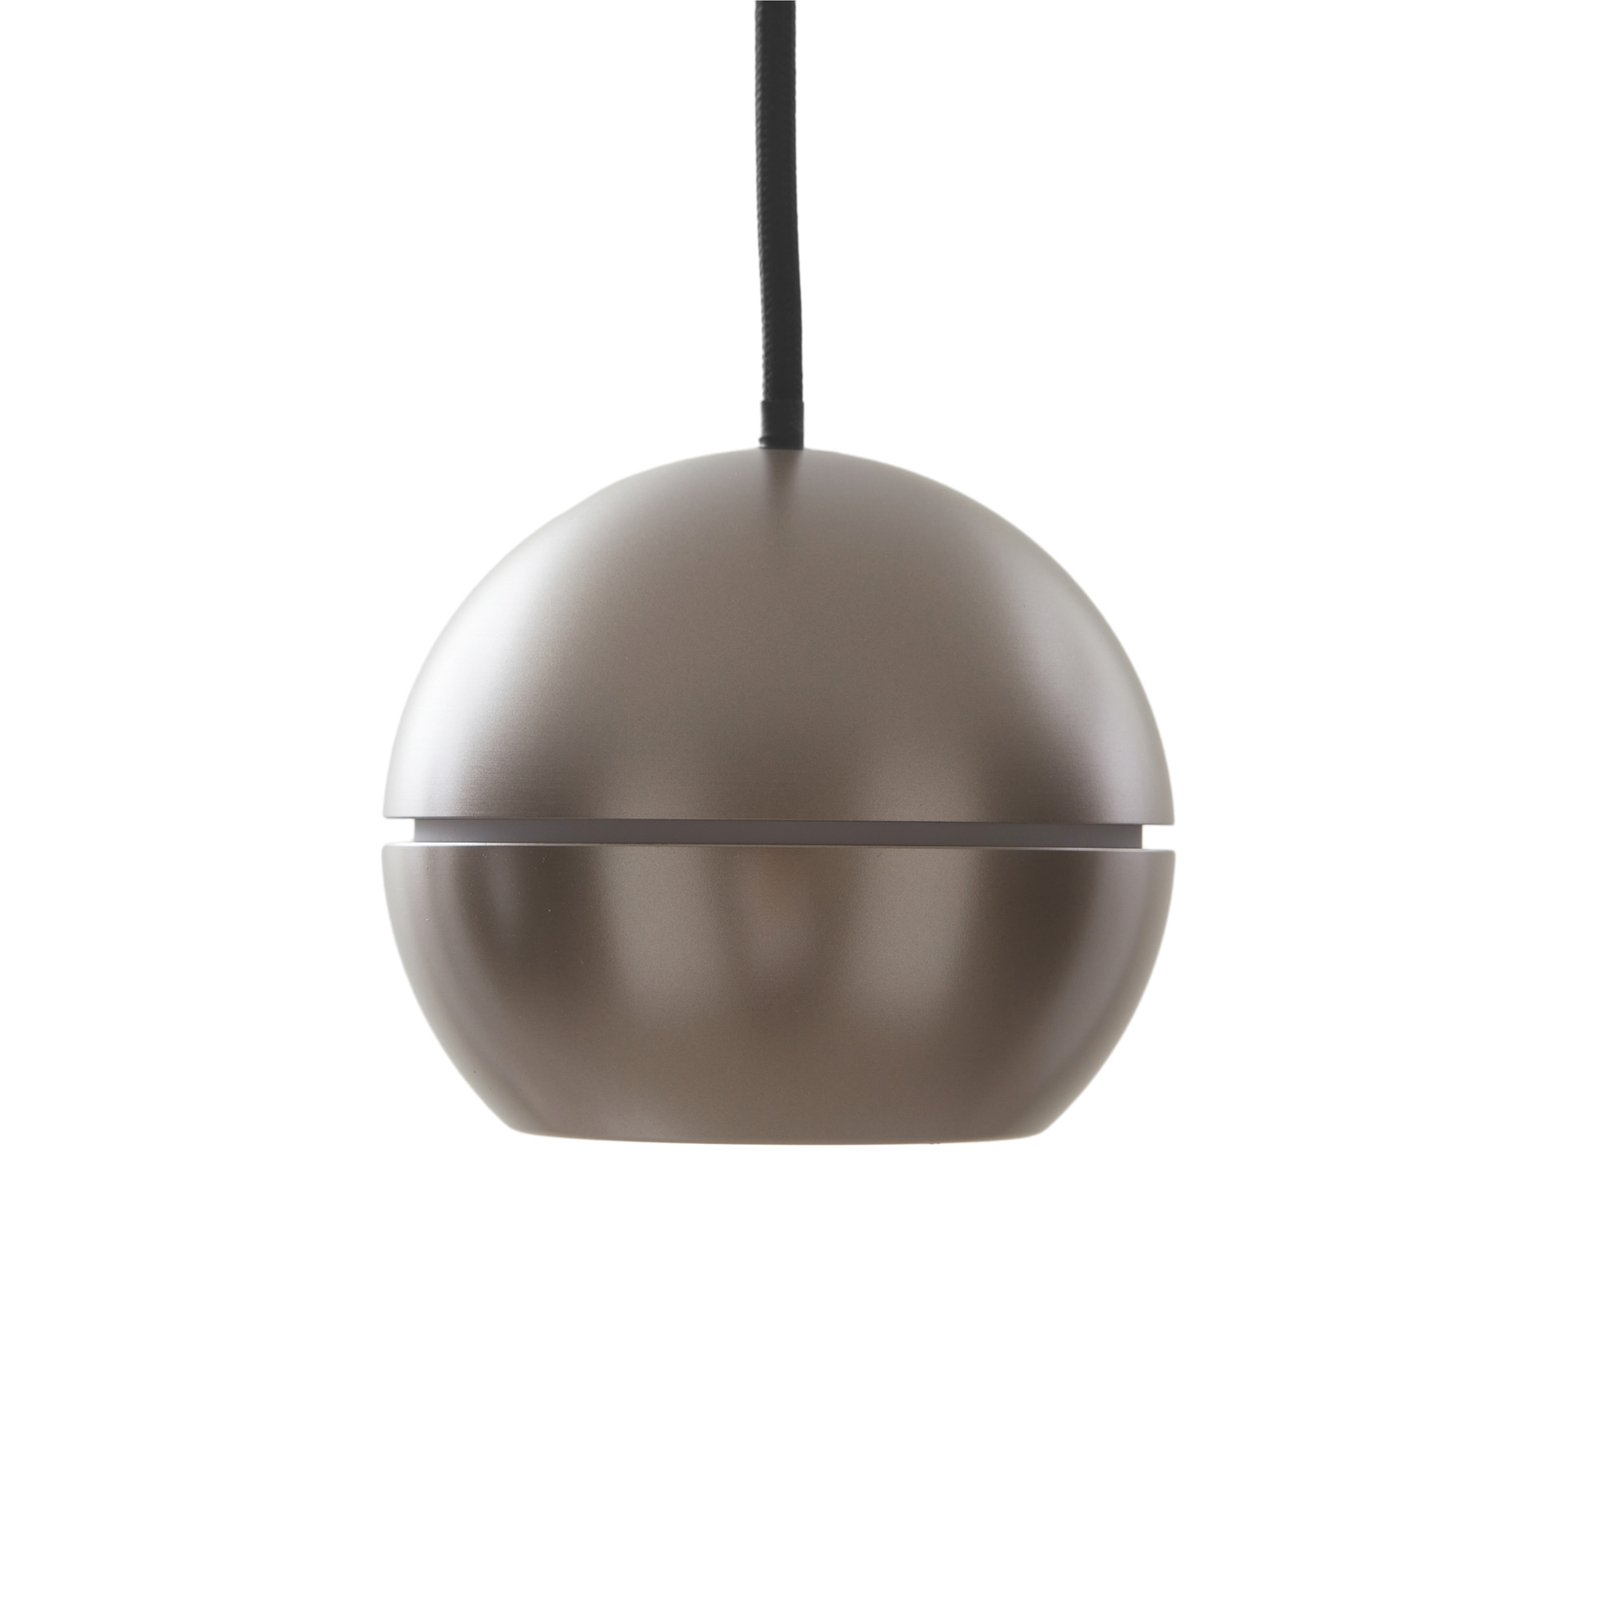 Lucande LED pendant light Plarion, nickel-coloured, aluminium, Ø 9 cm